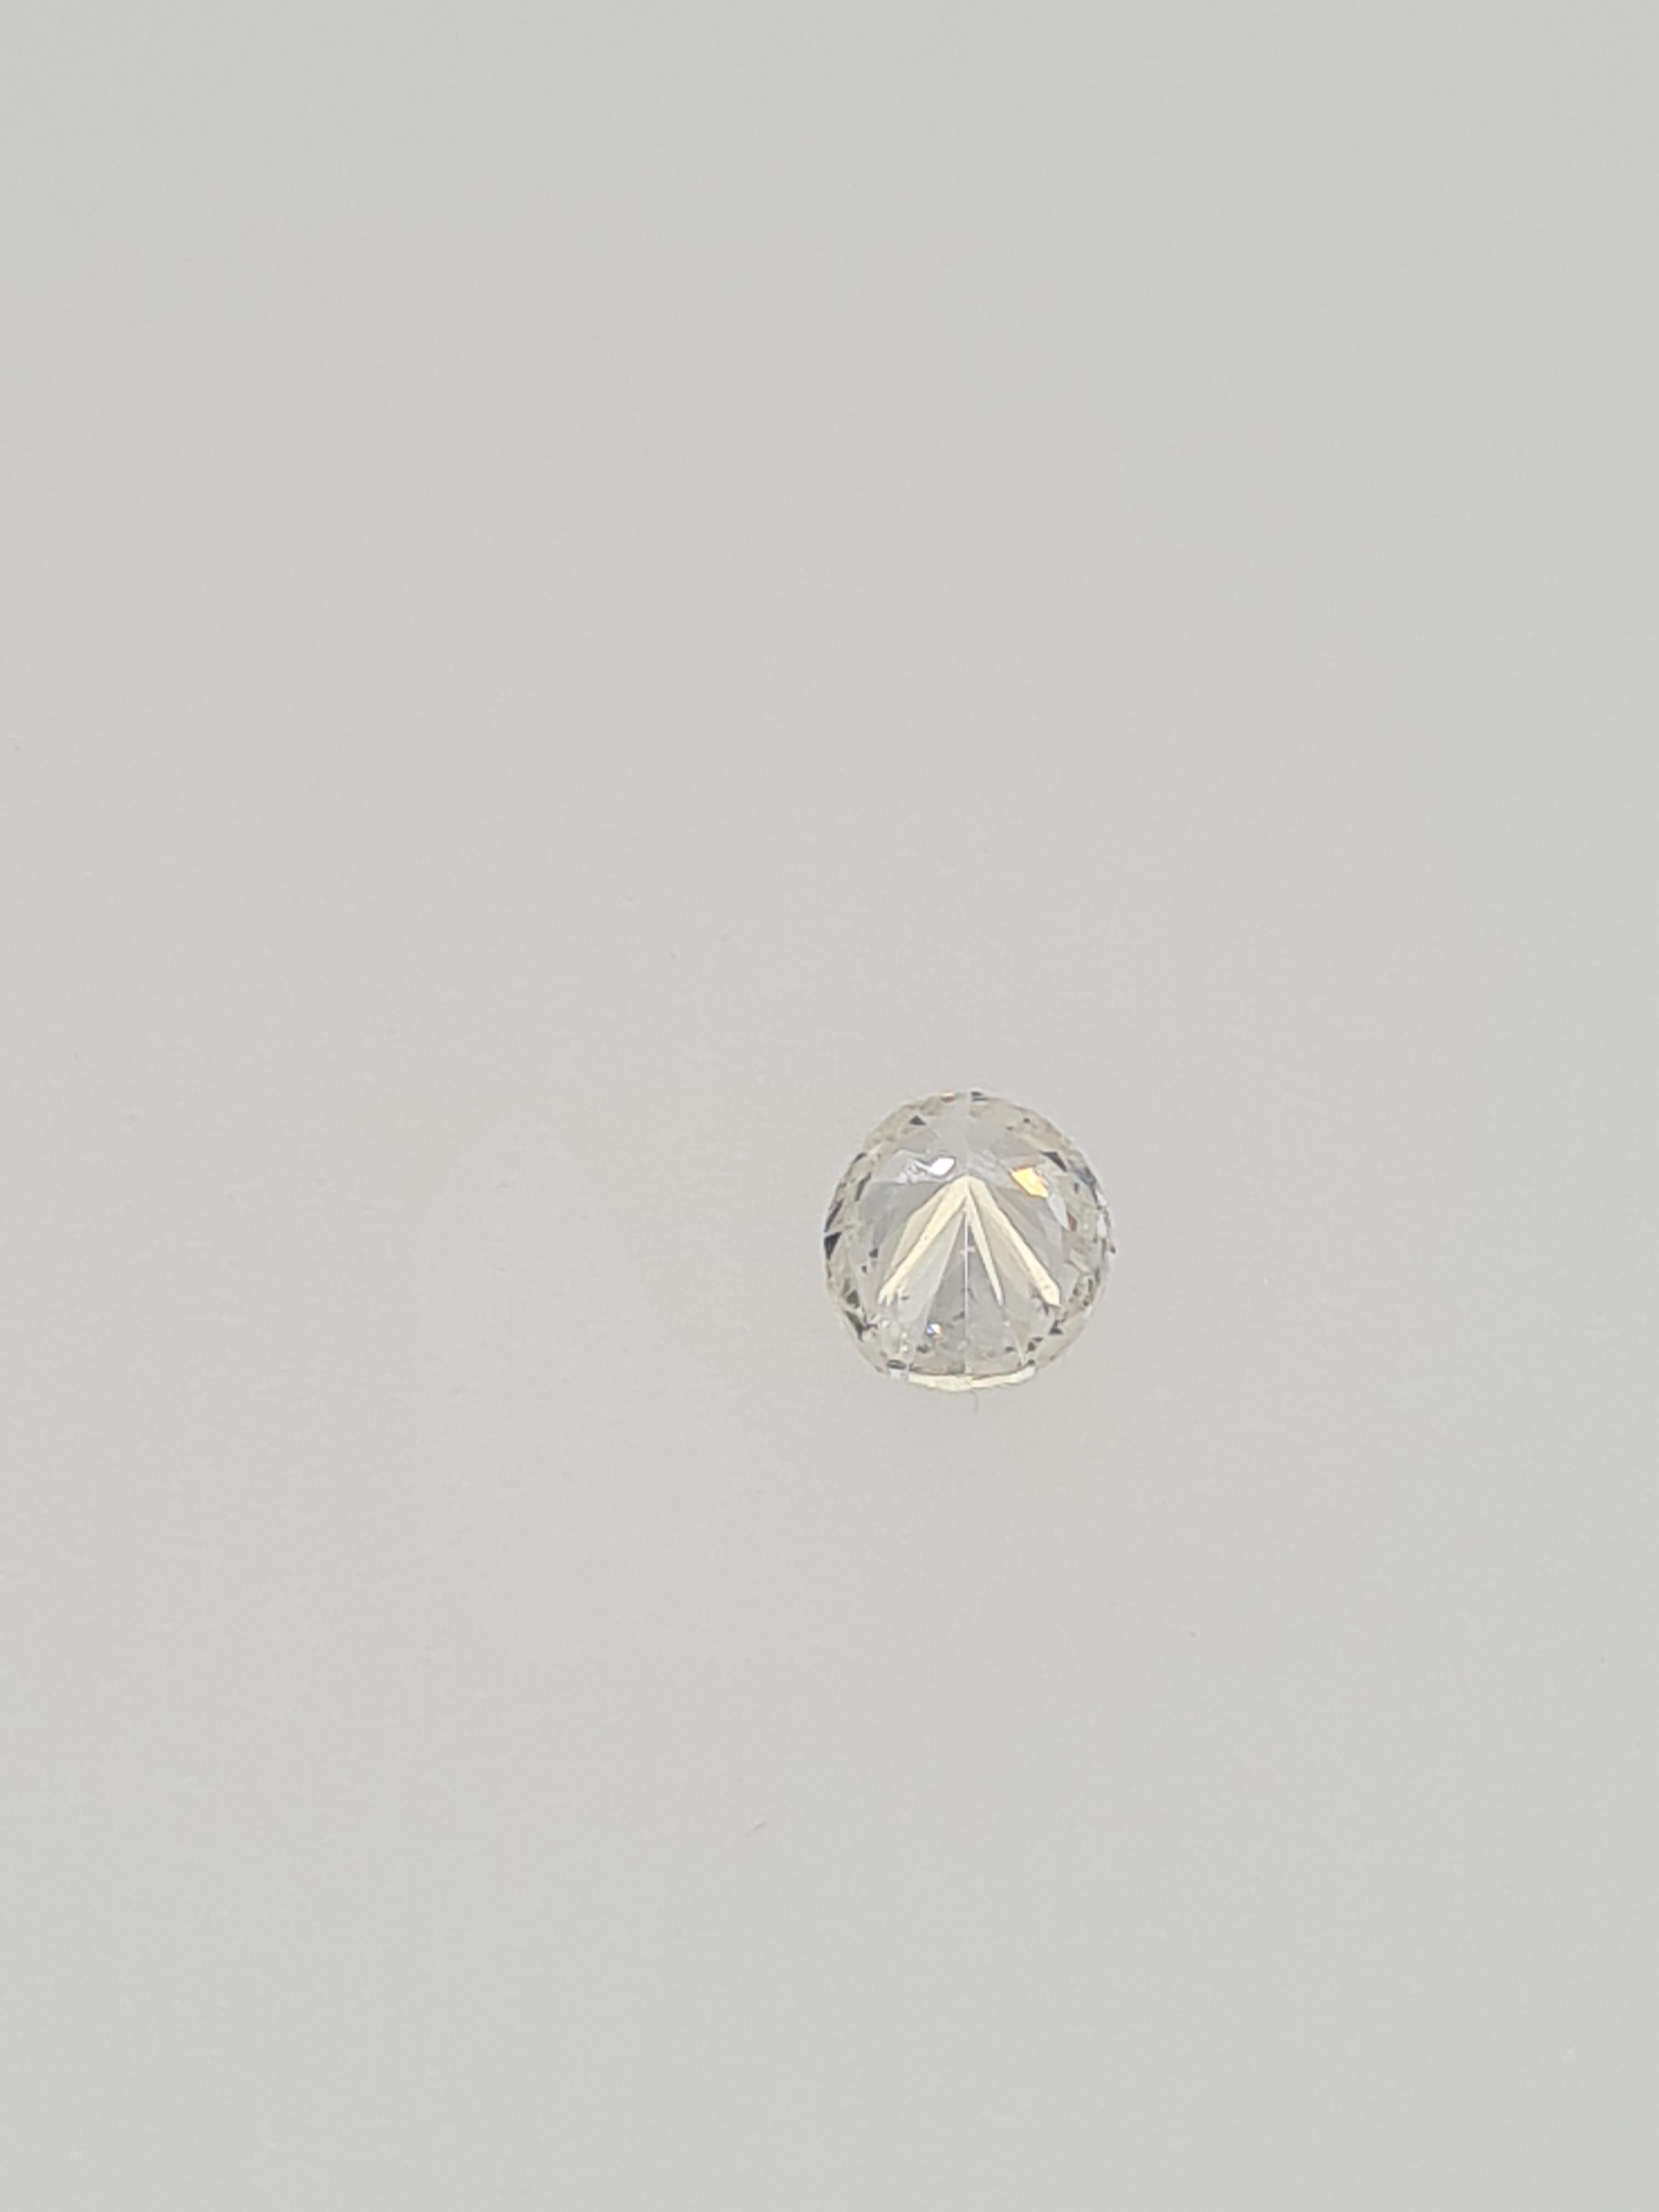 Oval cut diamond - Image 2 of 5